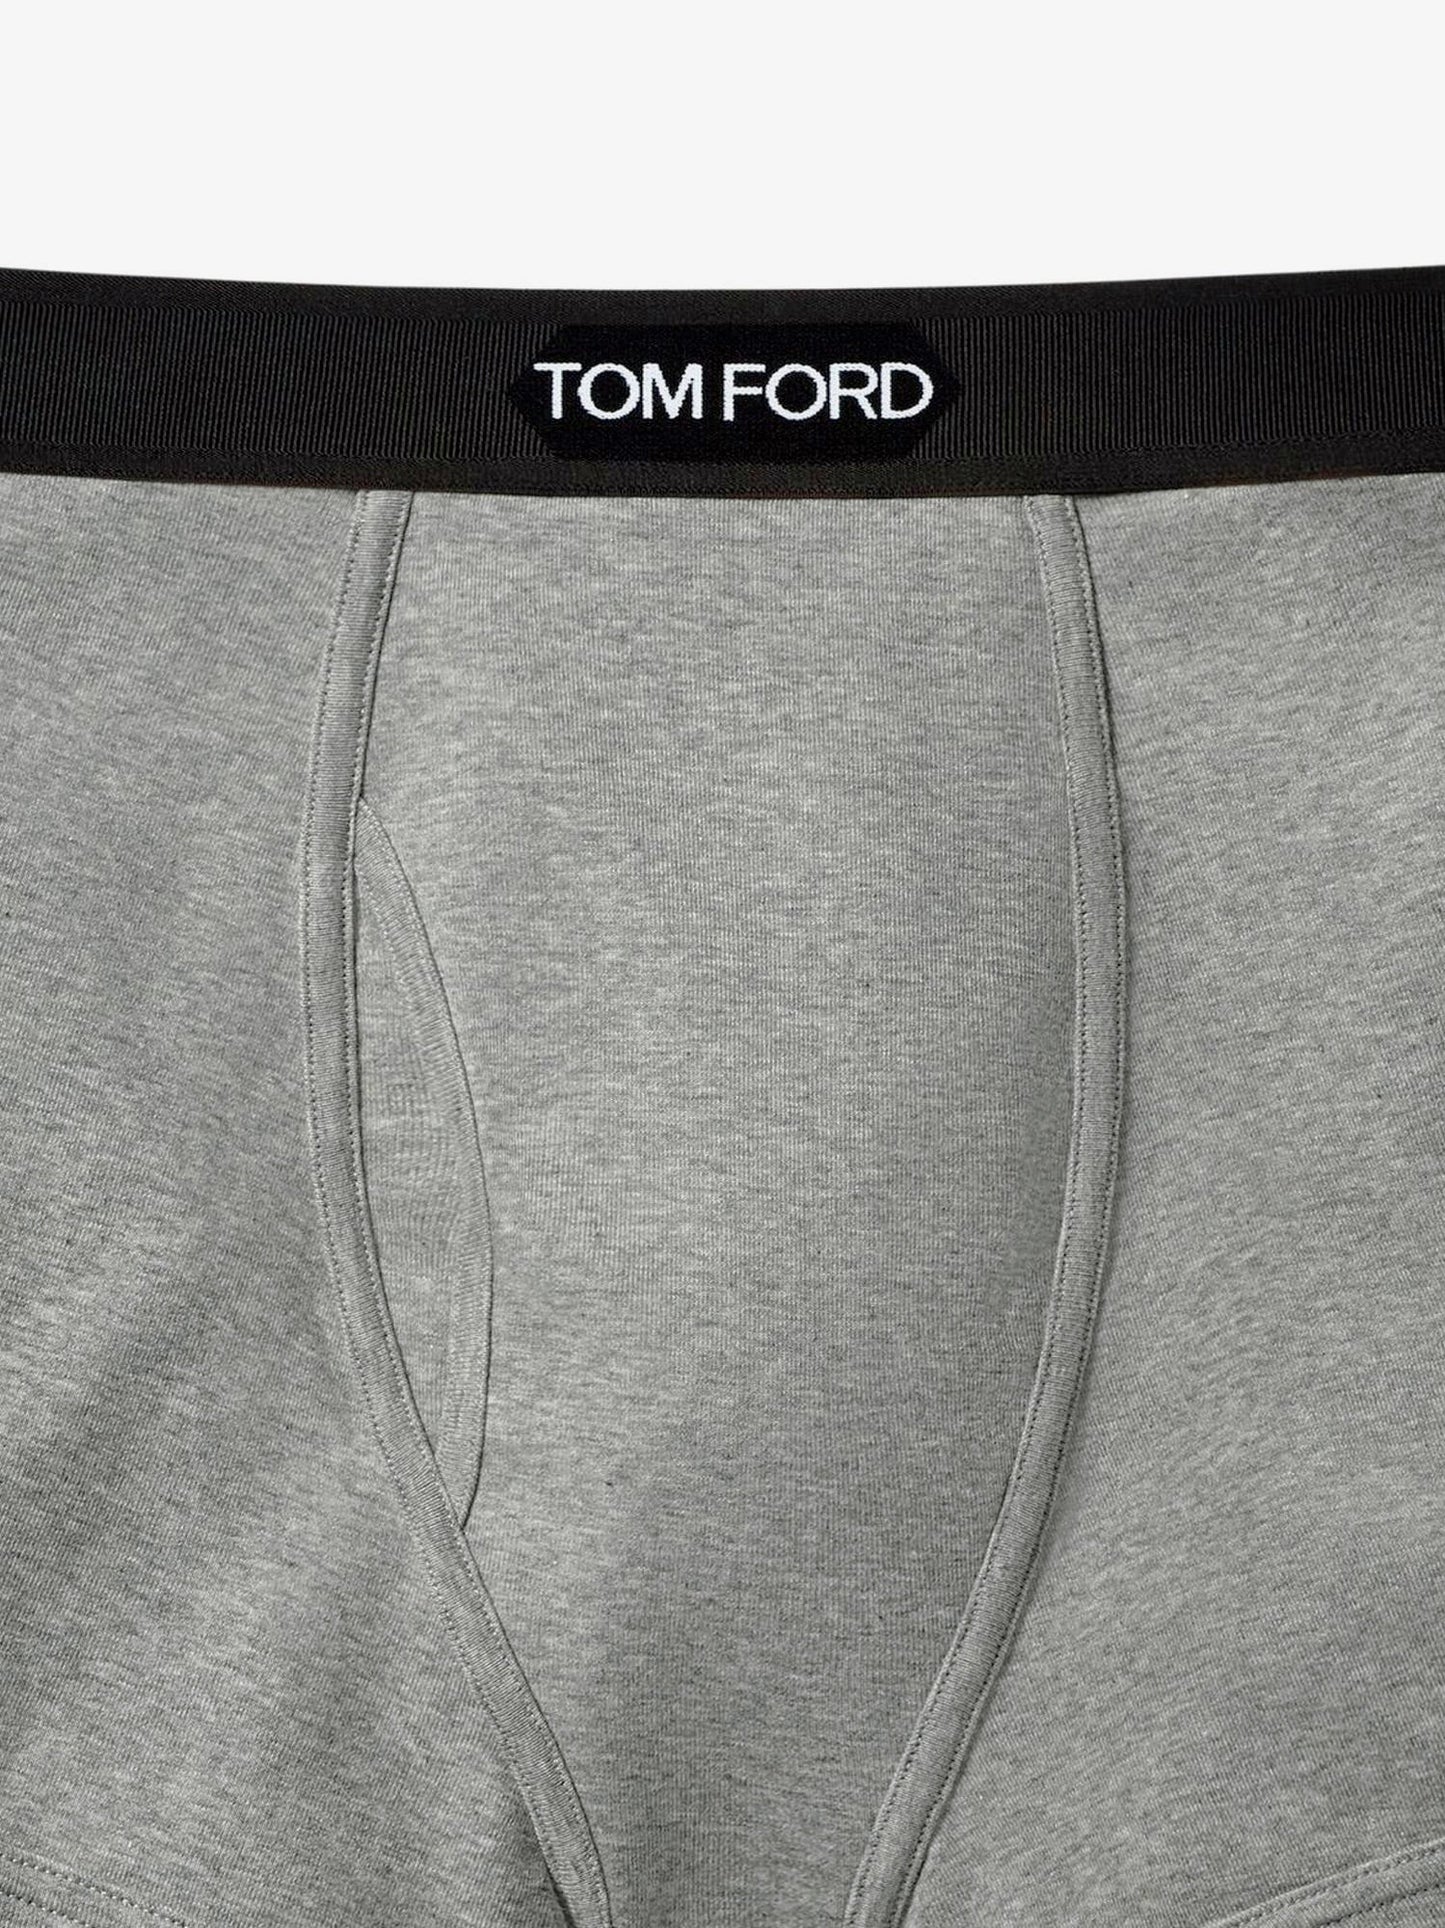 Tom Ford Man Boxer Man Grey Underwear